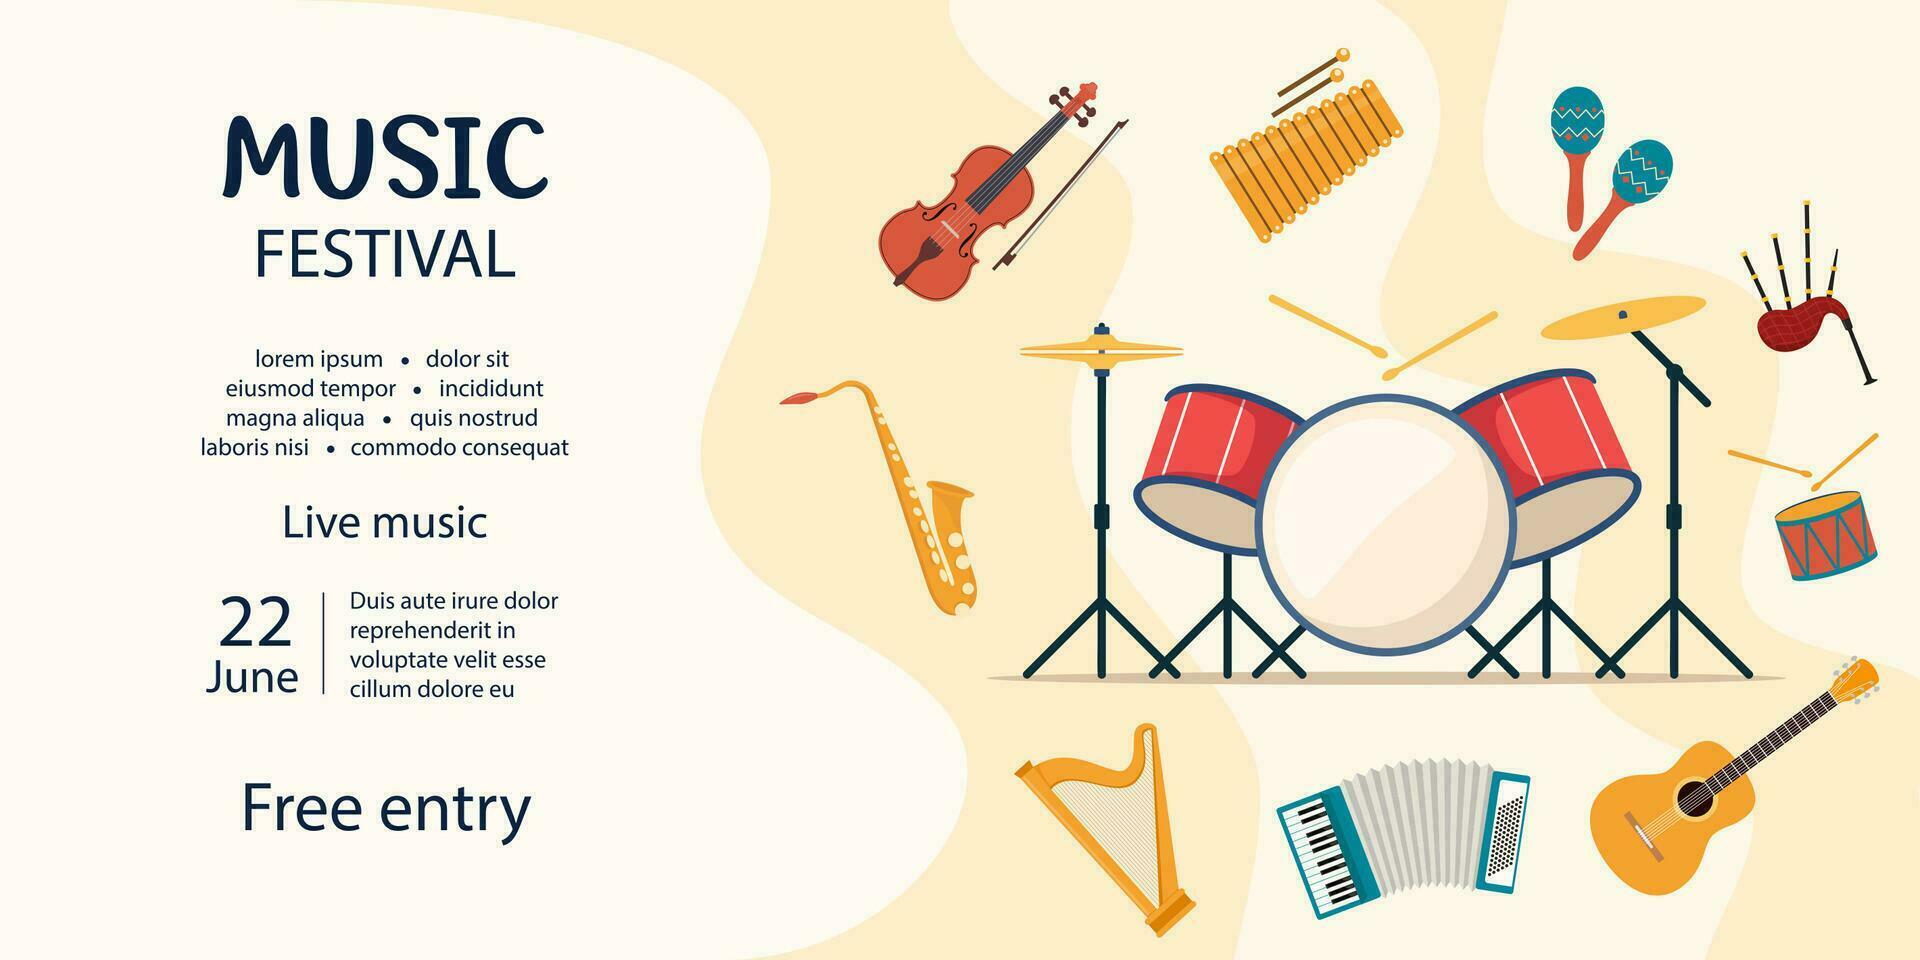 Music festival invitation. Musical instruments. Guitar, violin, harp, dulcimer, maracas, guitar, drum kit, bagpipes, saxophone. Vector illustration.